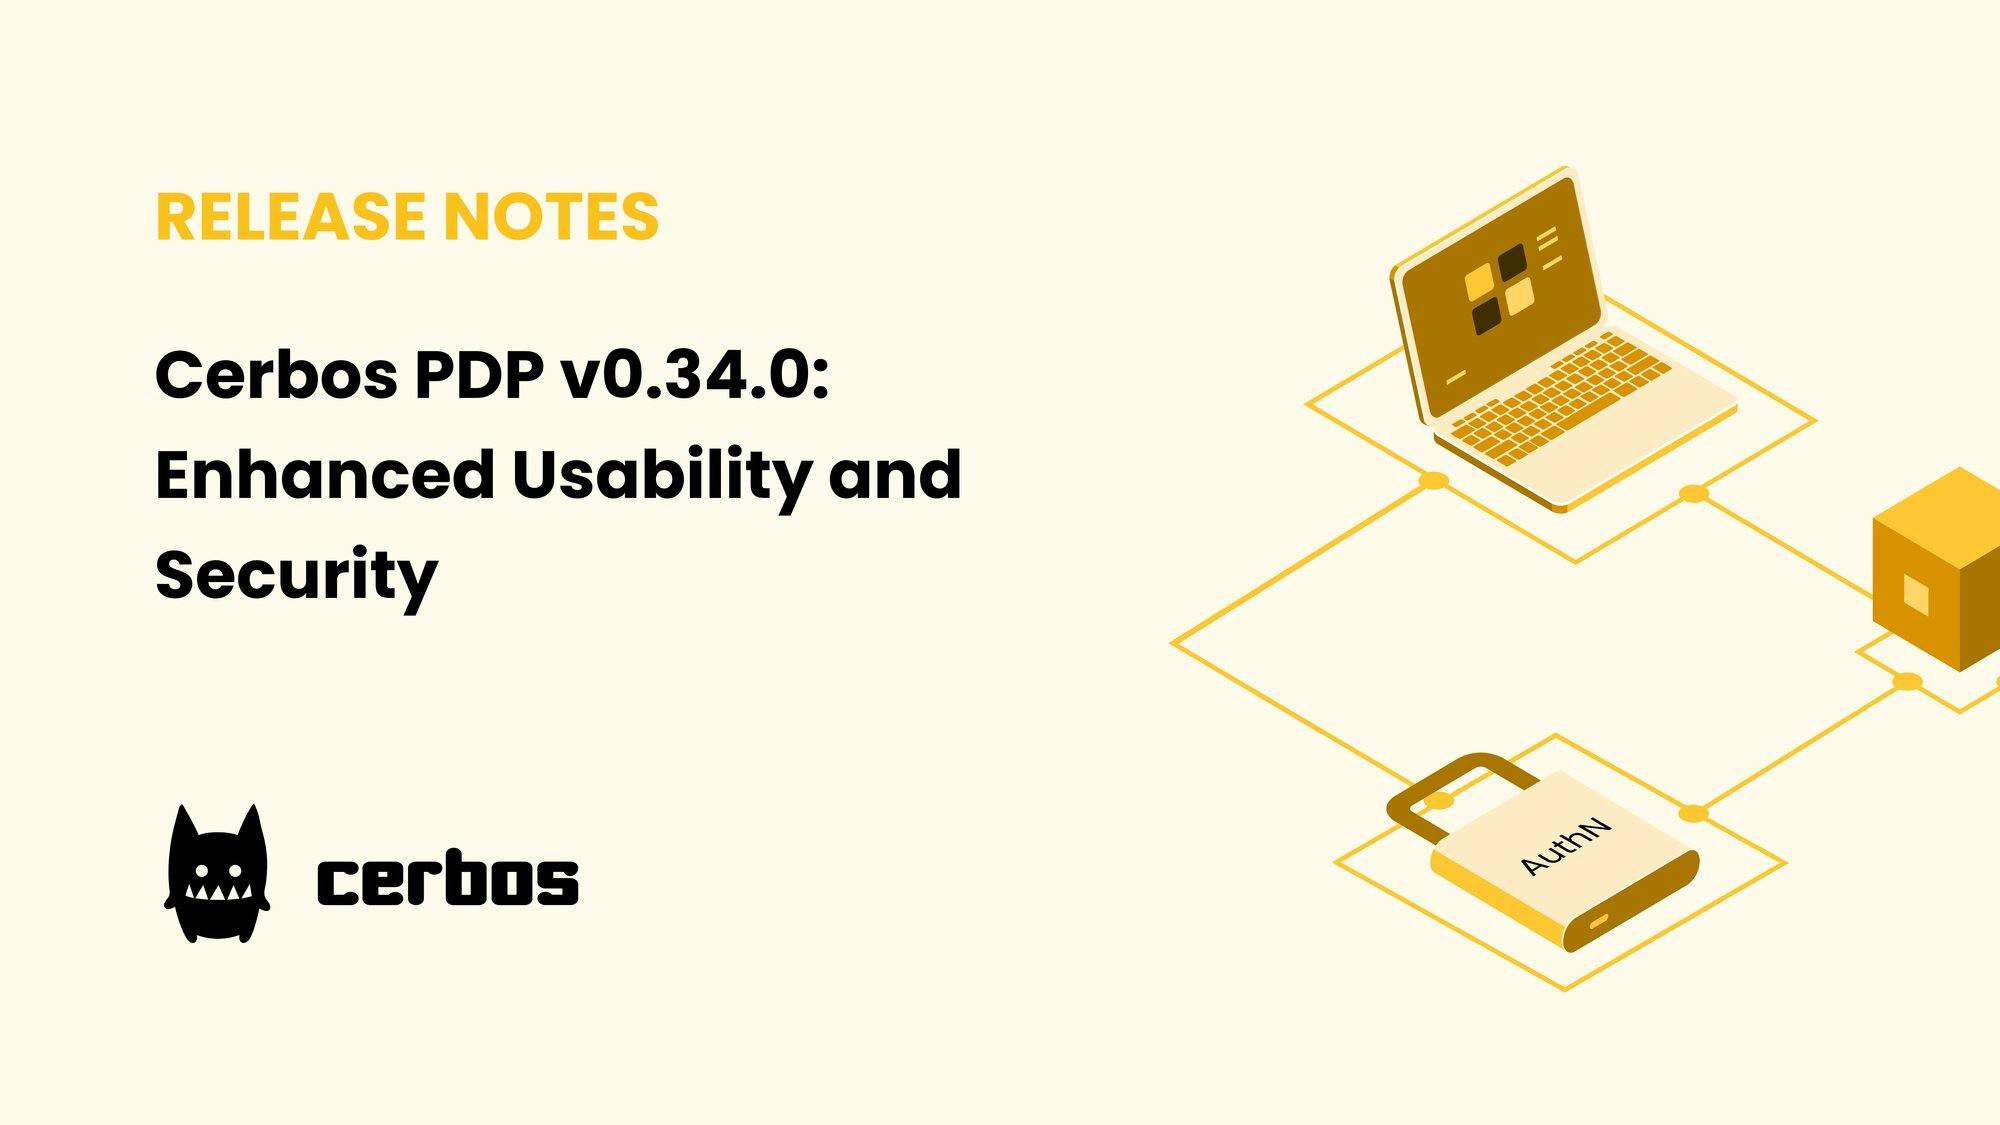 Cerbos PDP v0.34.0: Enhanced Usability and Security